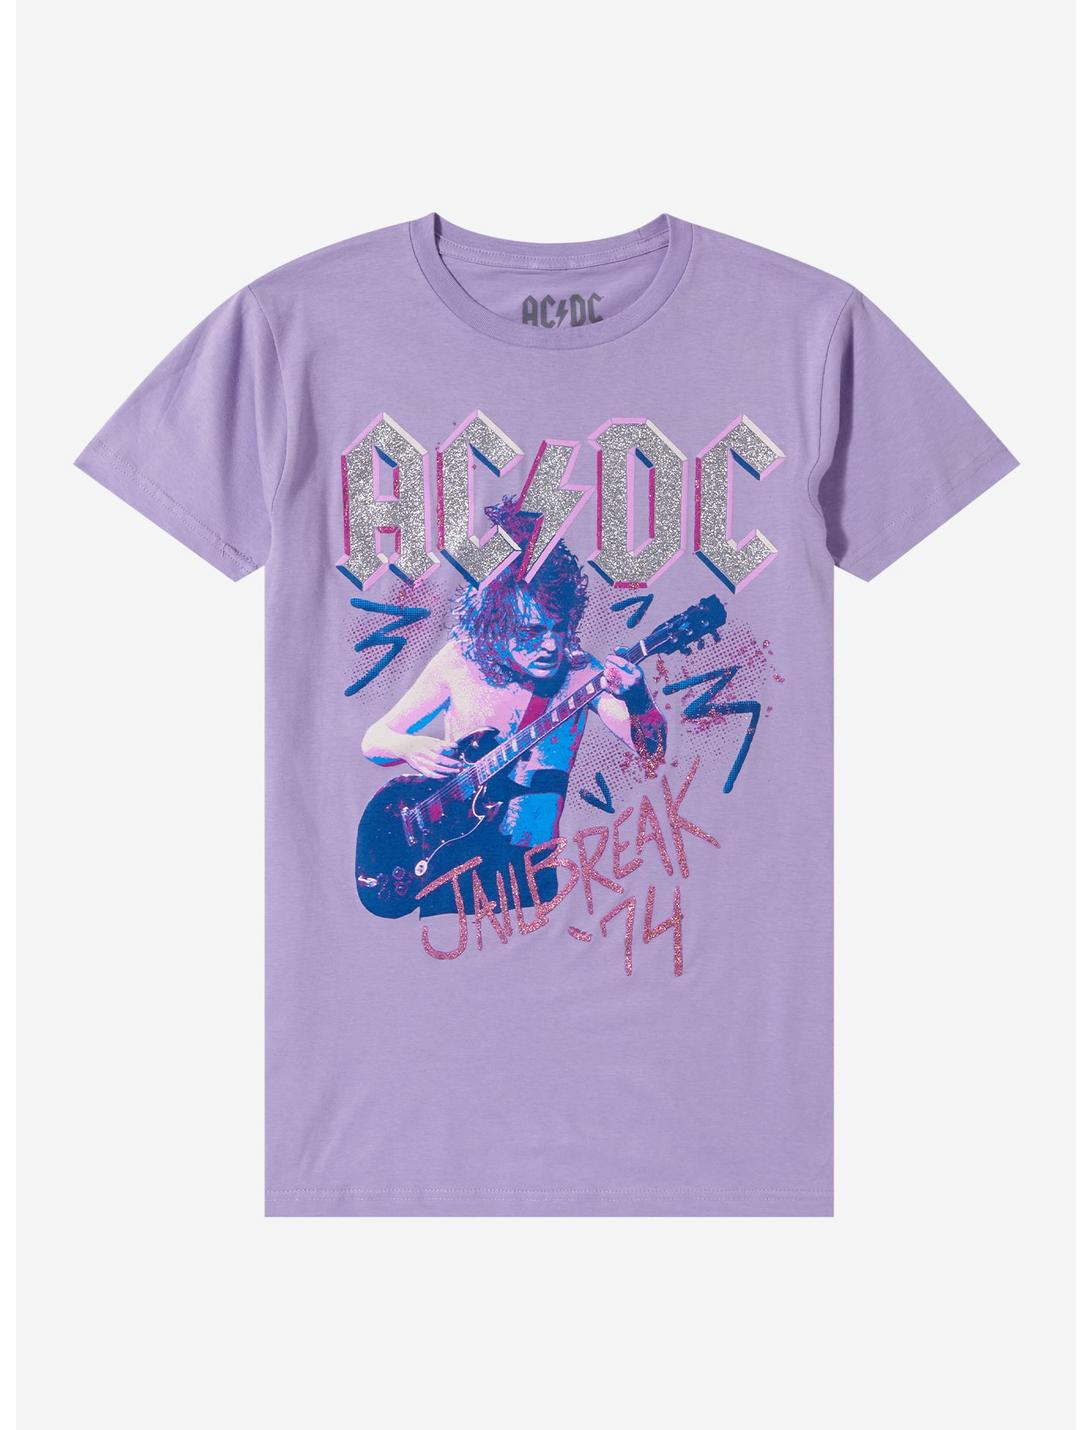 AC/DC Jailbreak '74 Glitter Boyfriend Fit Girls T-Shirt, LAVENDER, hi-res